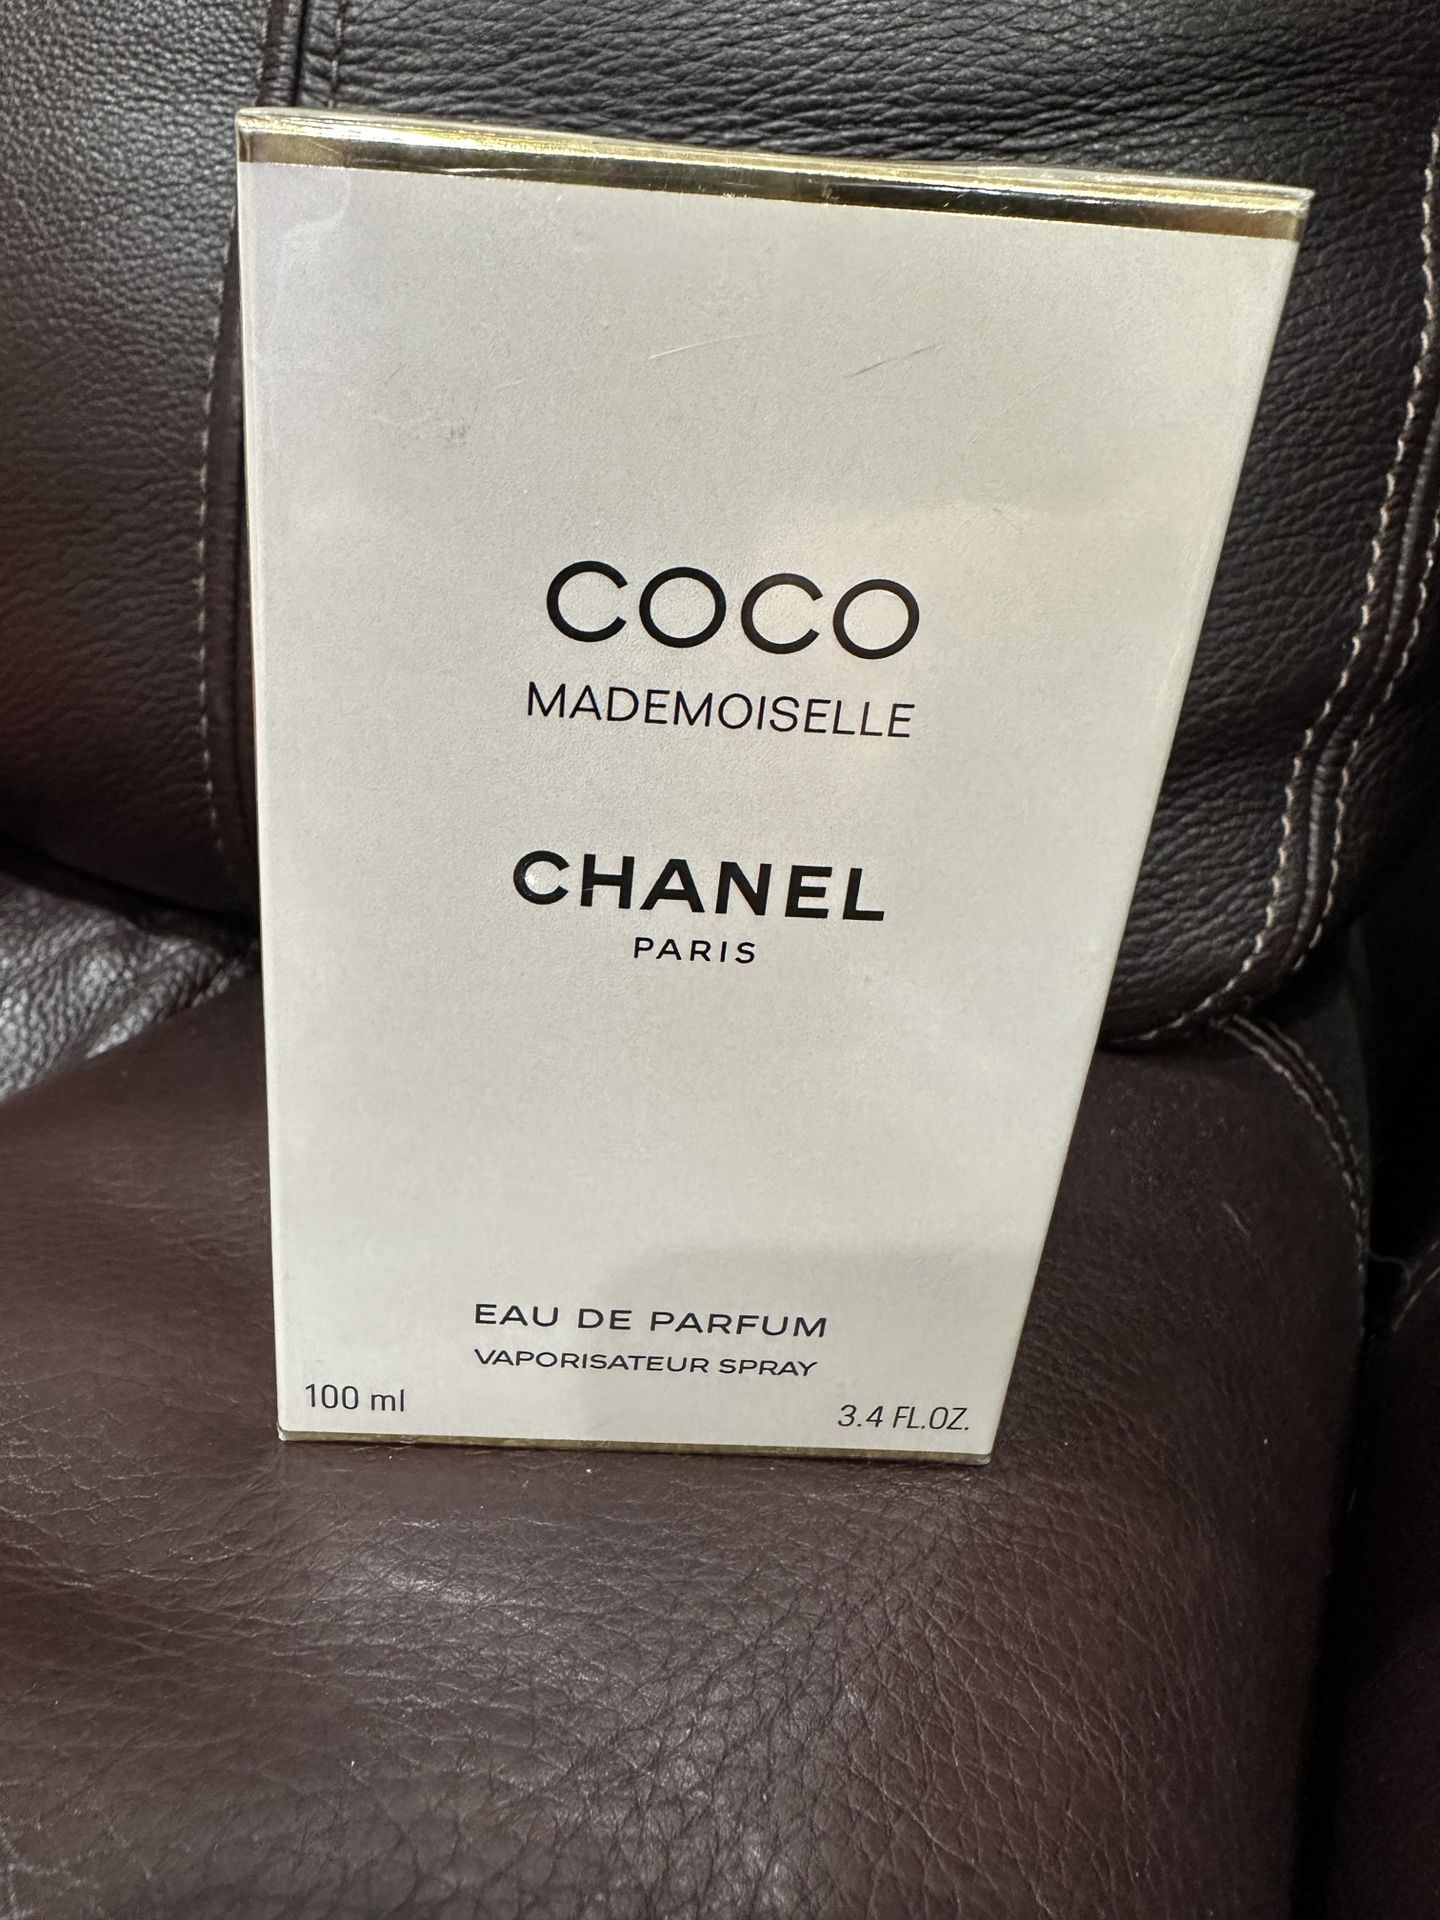 Chanel COCO MADEMOISELLE 3.4 Perfume for Sale in Brea, CA - OfferUp